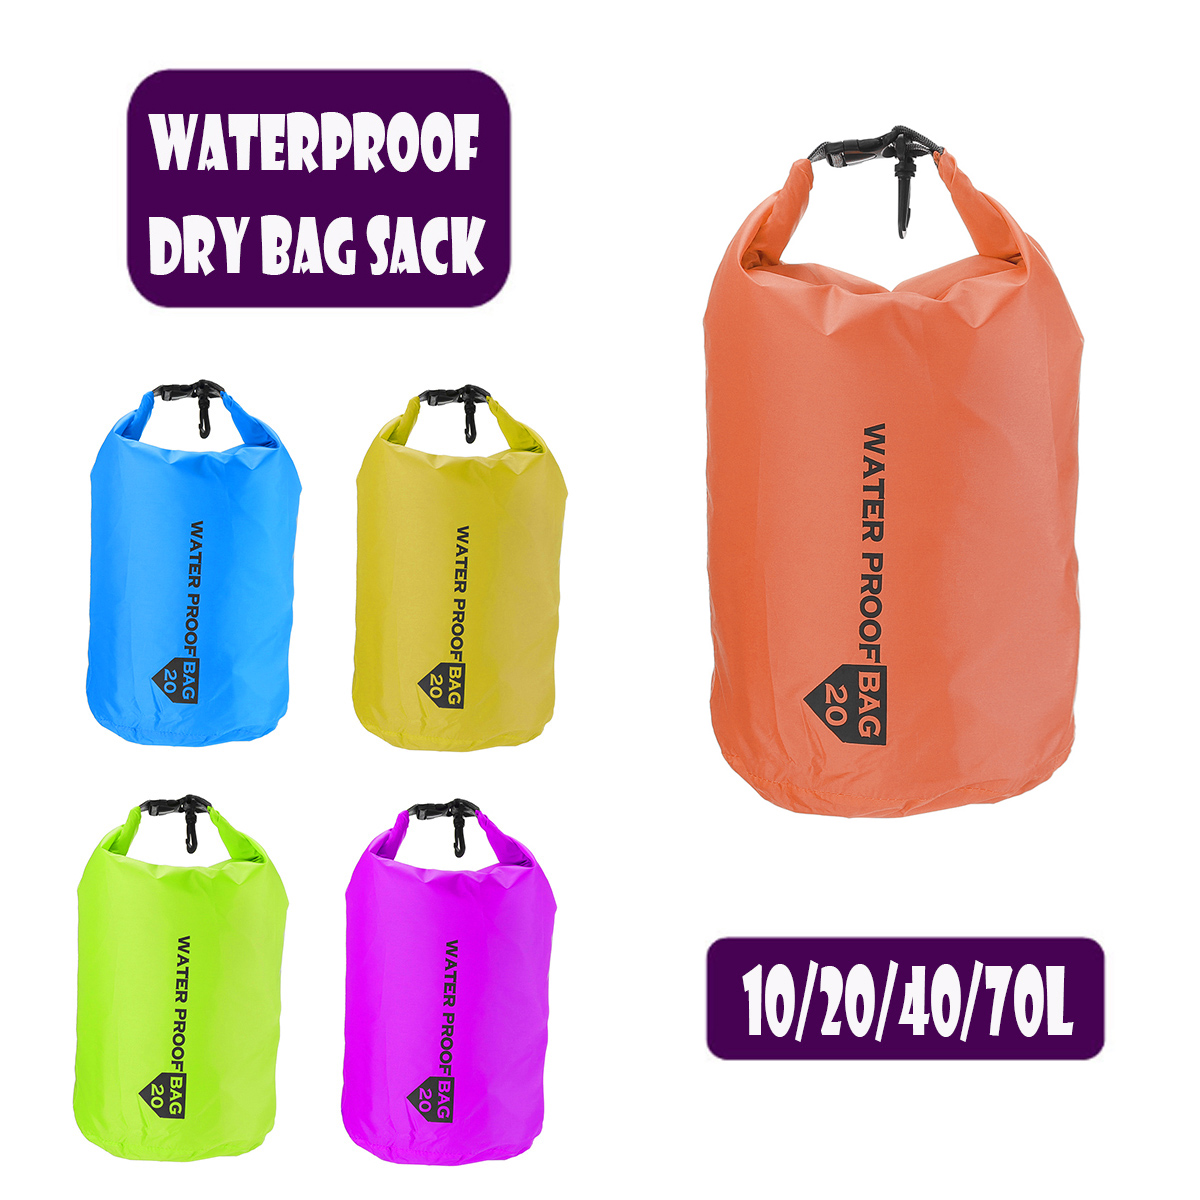 10L-20L-40L-70L-Waterproof-Bag-Dry-Sack-Storage-Pack-For-Kayak-Canoeing-Camping-Travel-1531416-4